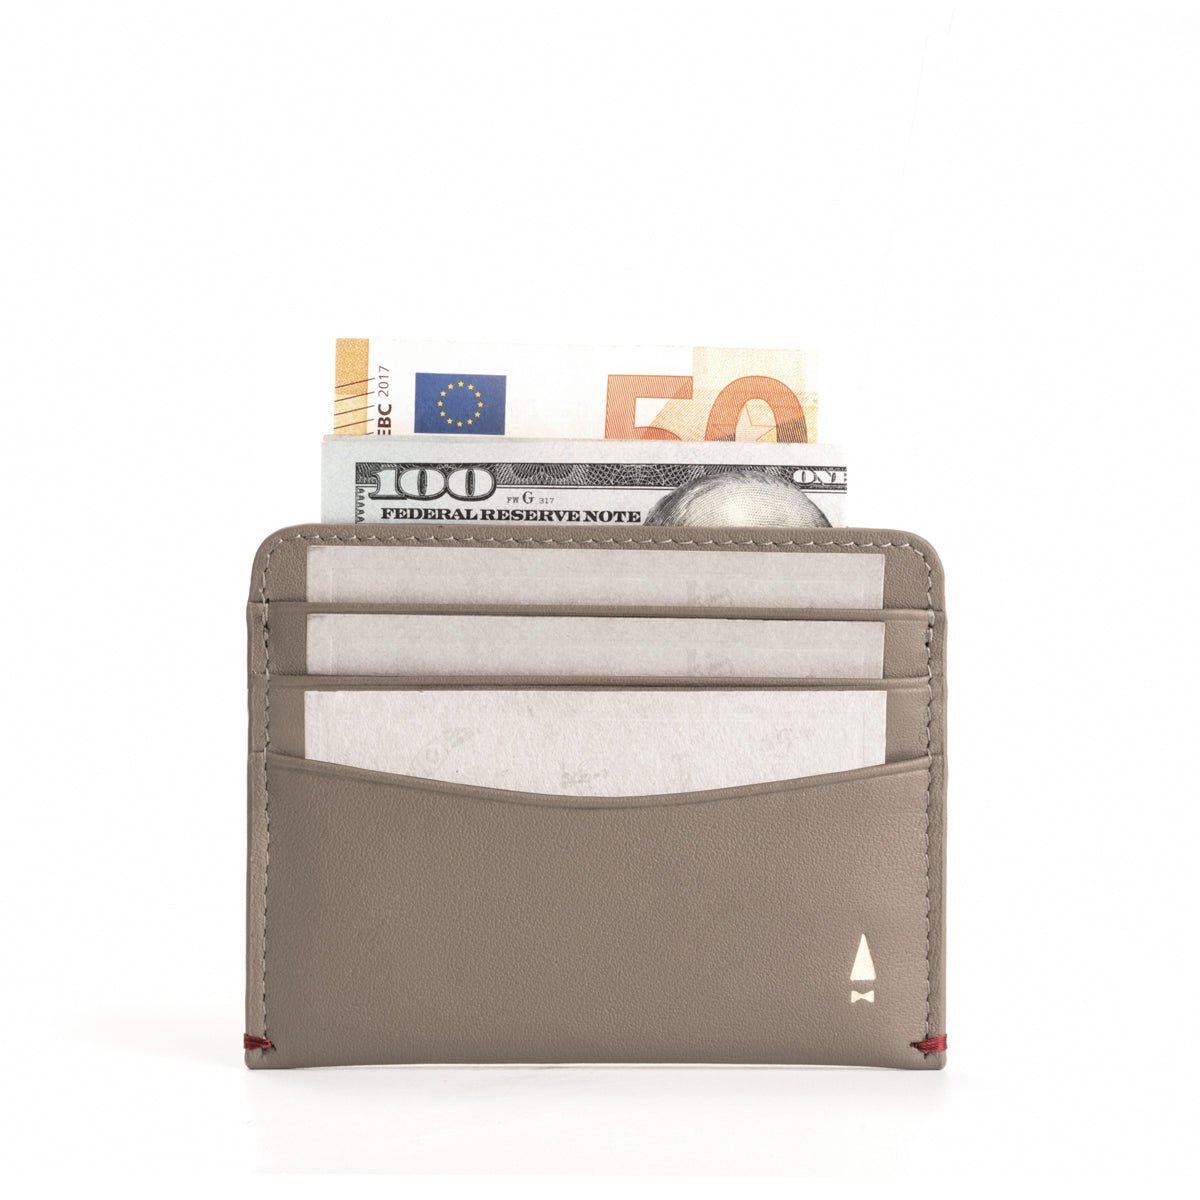 Gulliver Slim Cash Card Holder Wallet (RFID USA Nappa Leather)